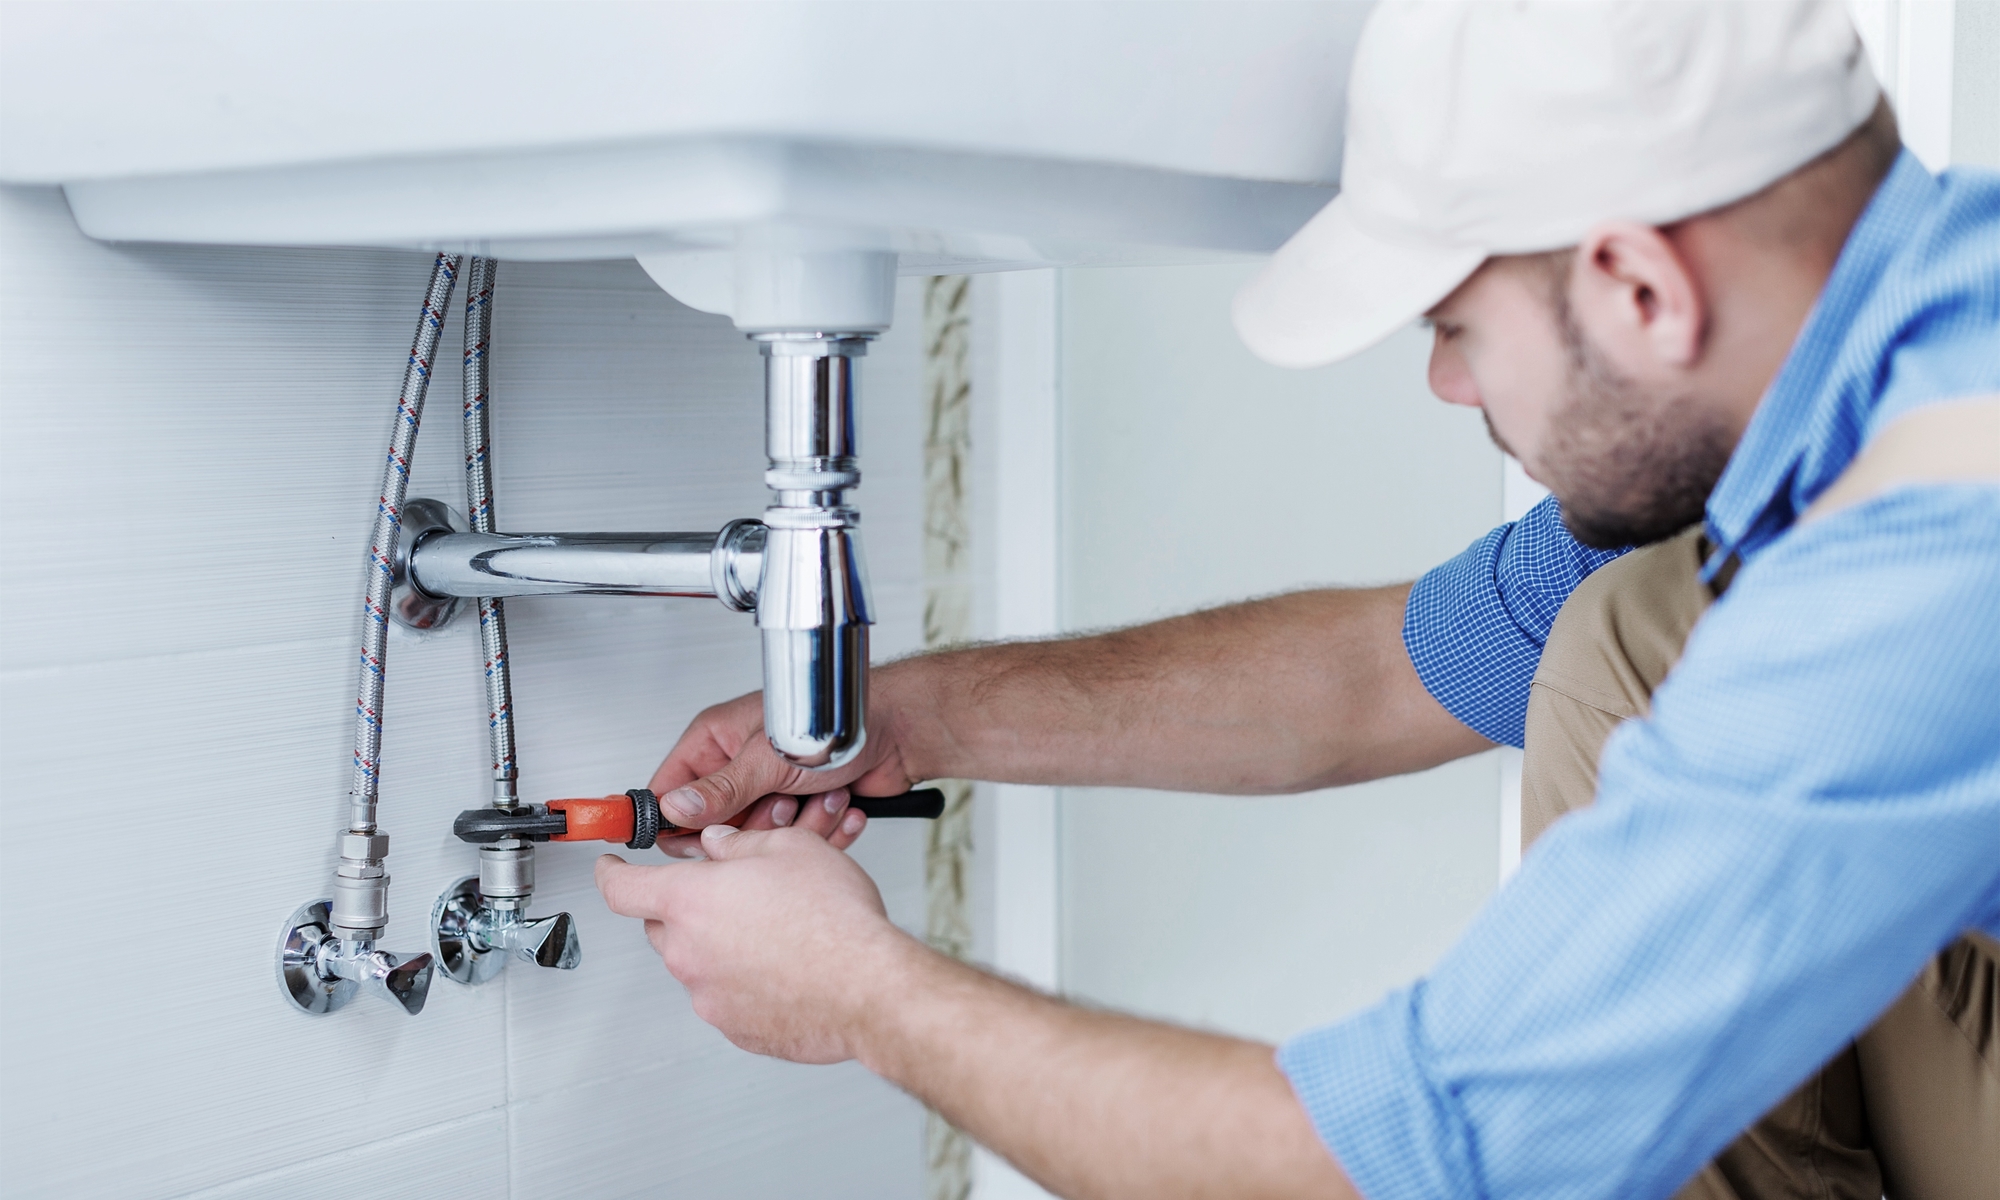 plumbing services